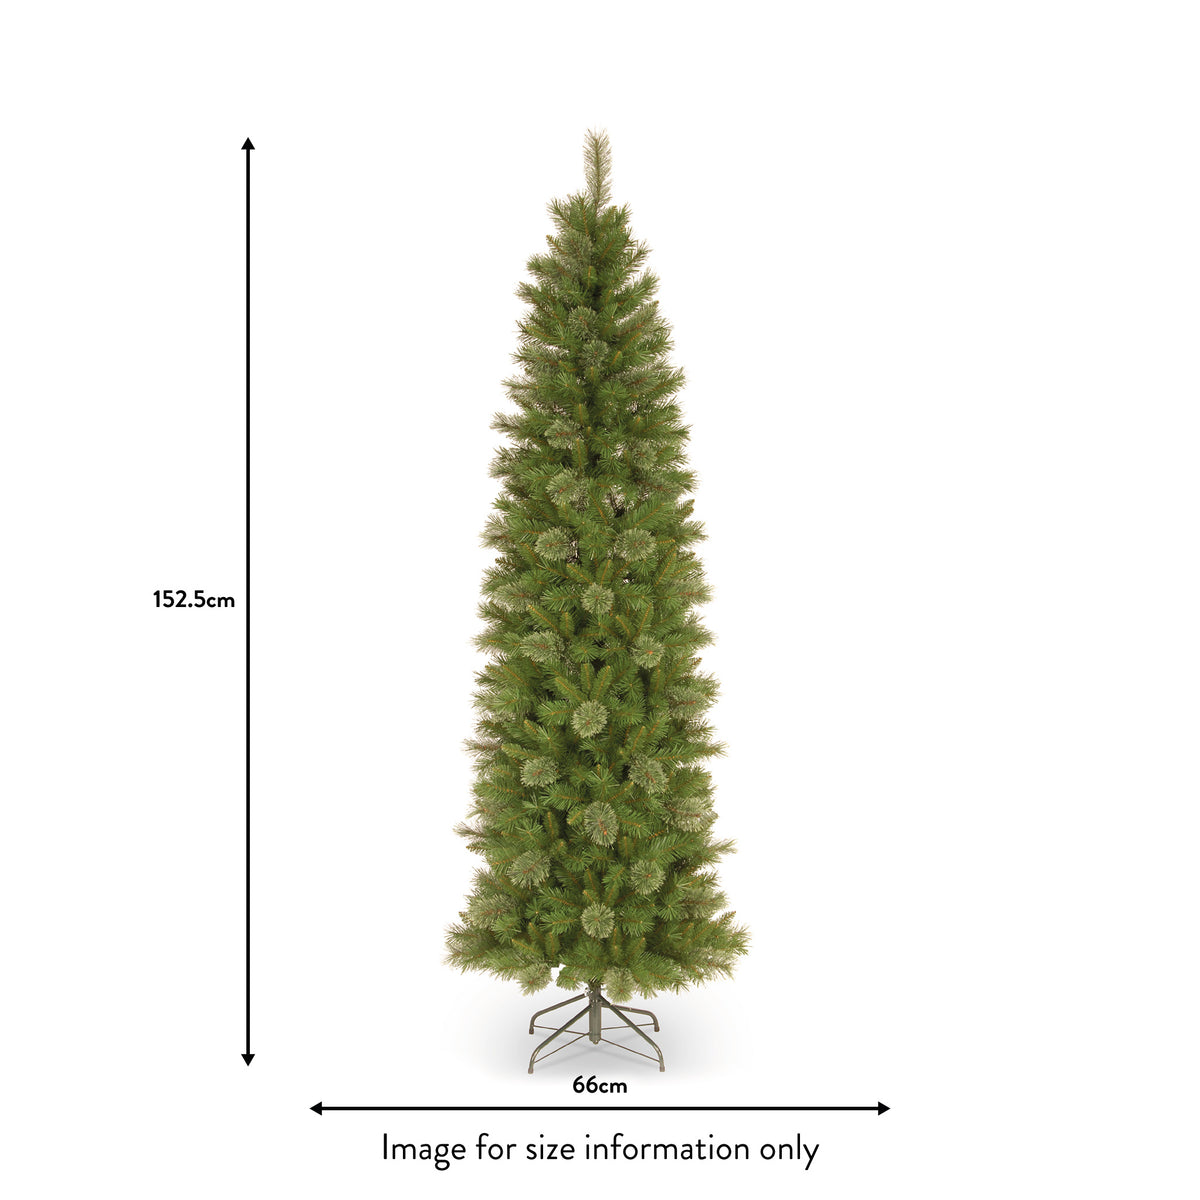 Tacoma Pine 5ft Pencil Tree dimensions